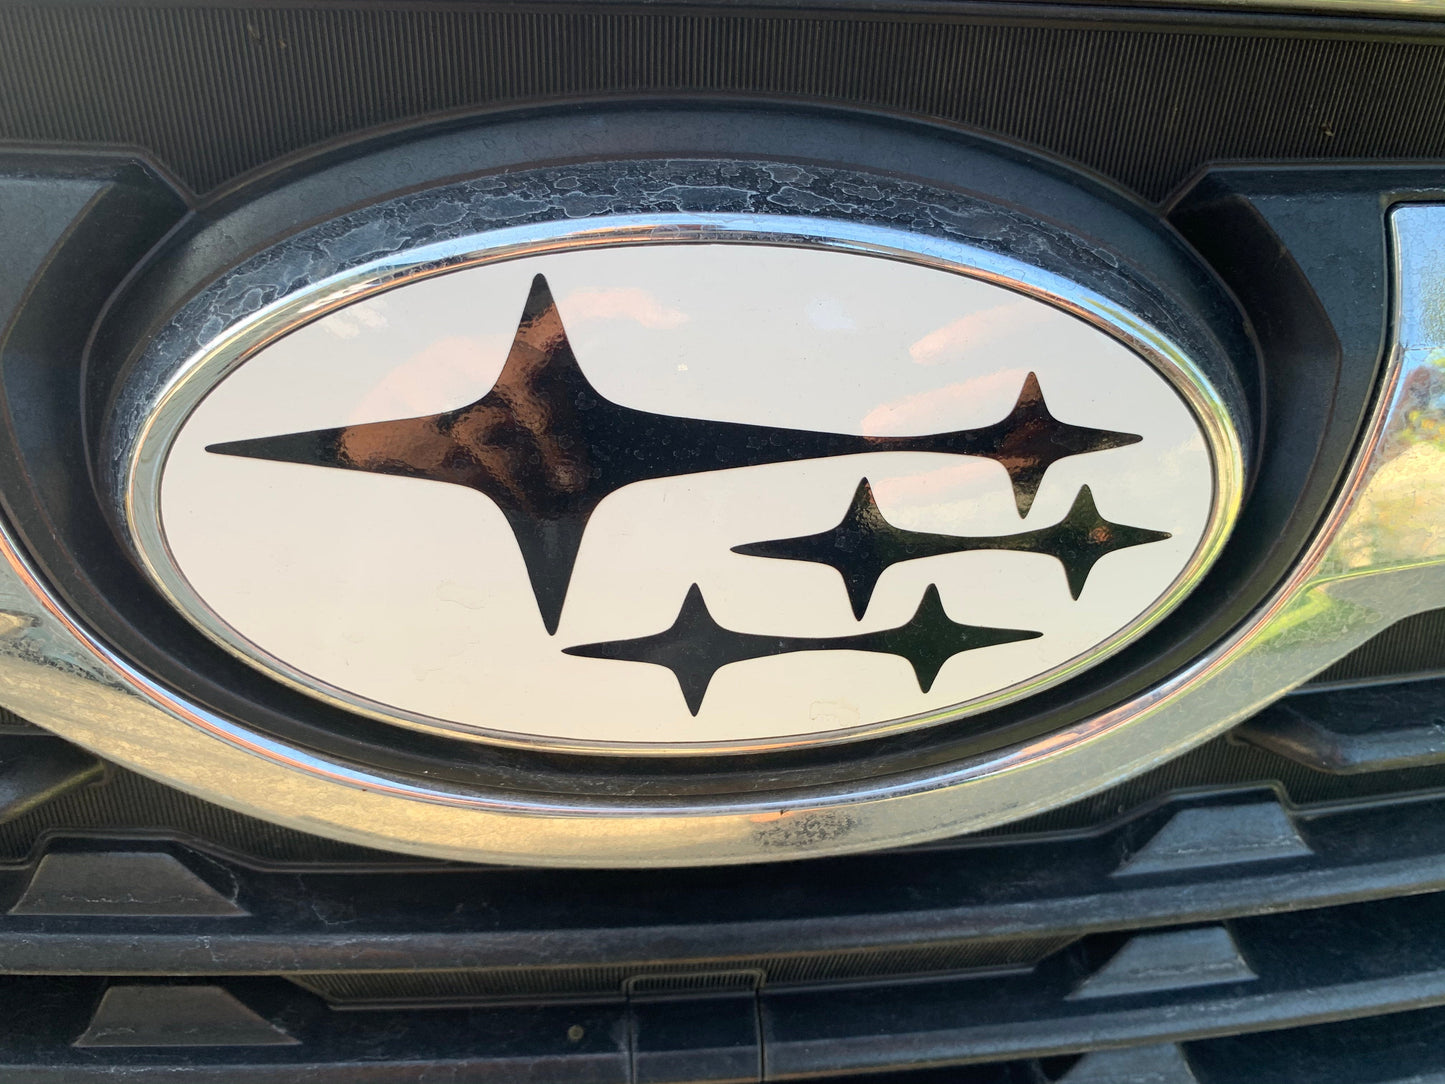 2023-2024 Ascent Emblem Overlay DECALS Compatible with Subaru Ascent | Front & Rear Set